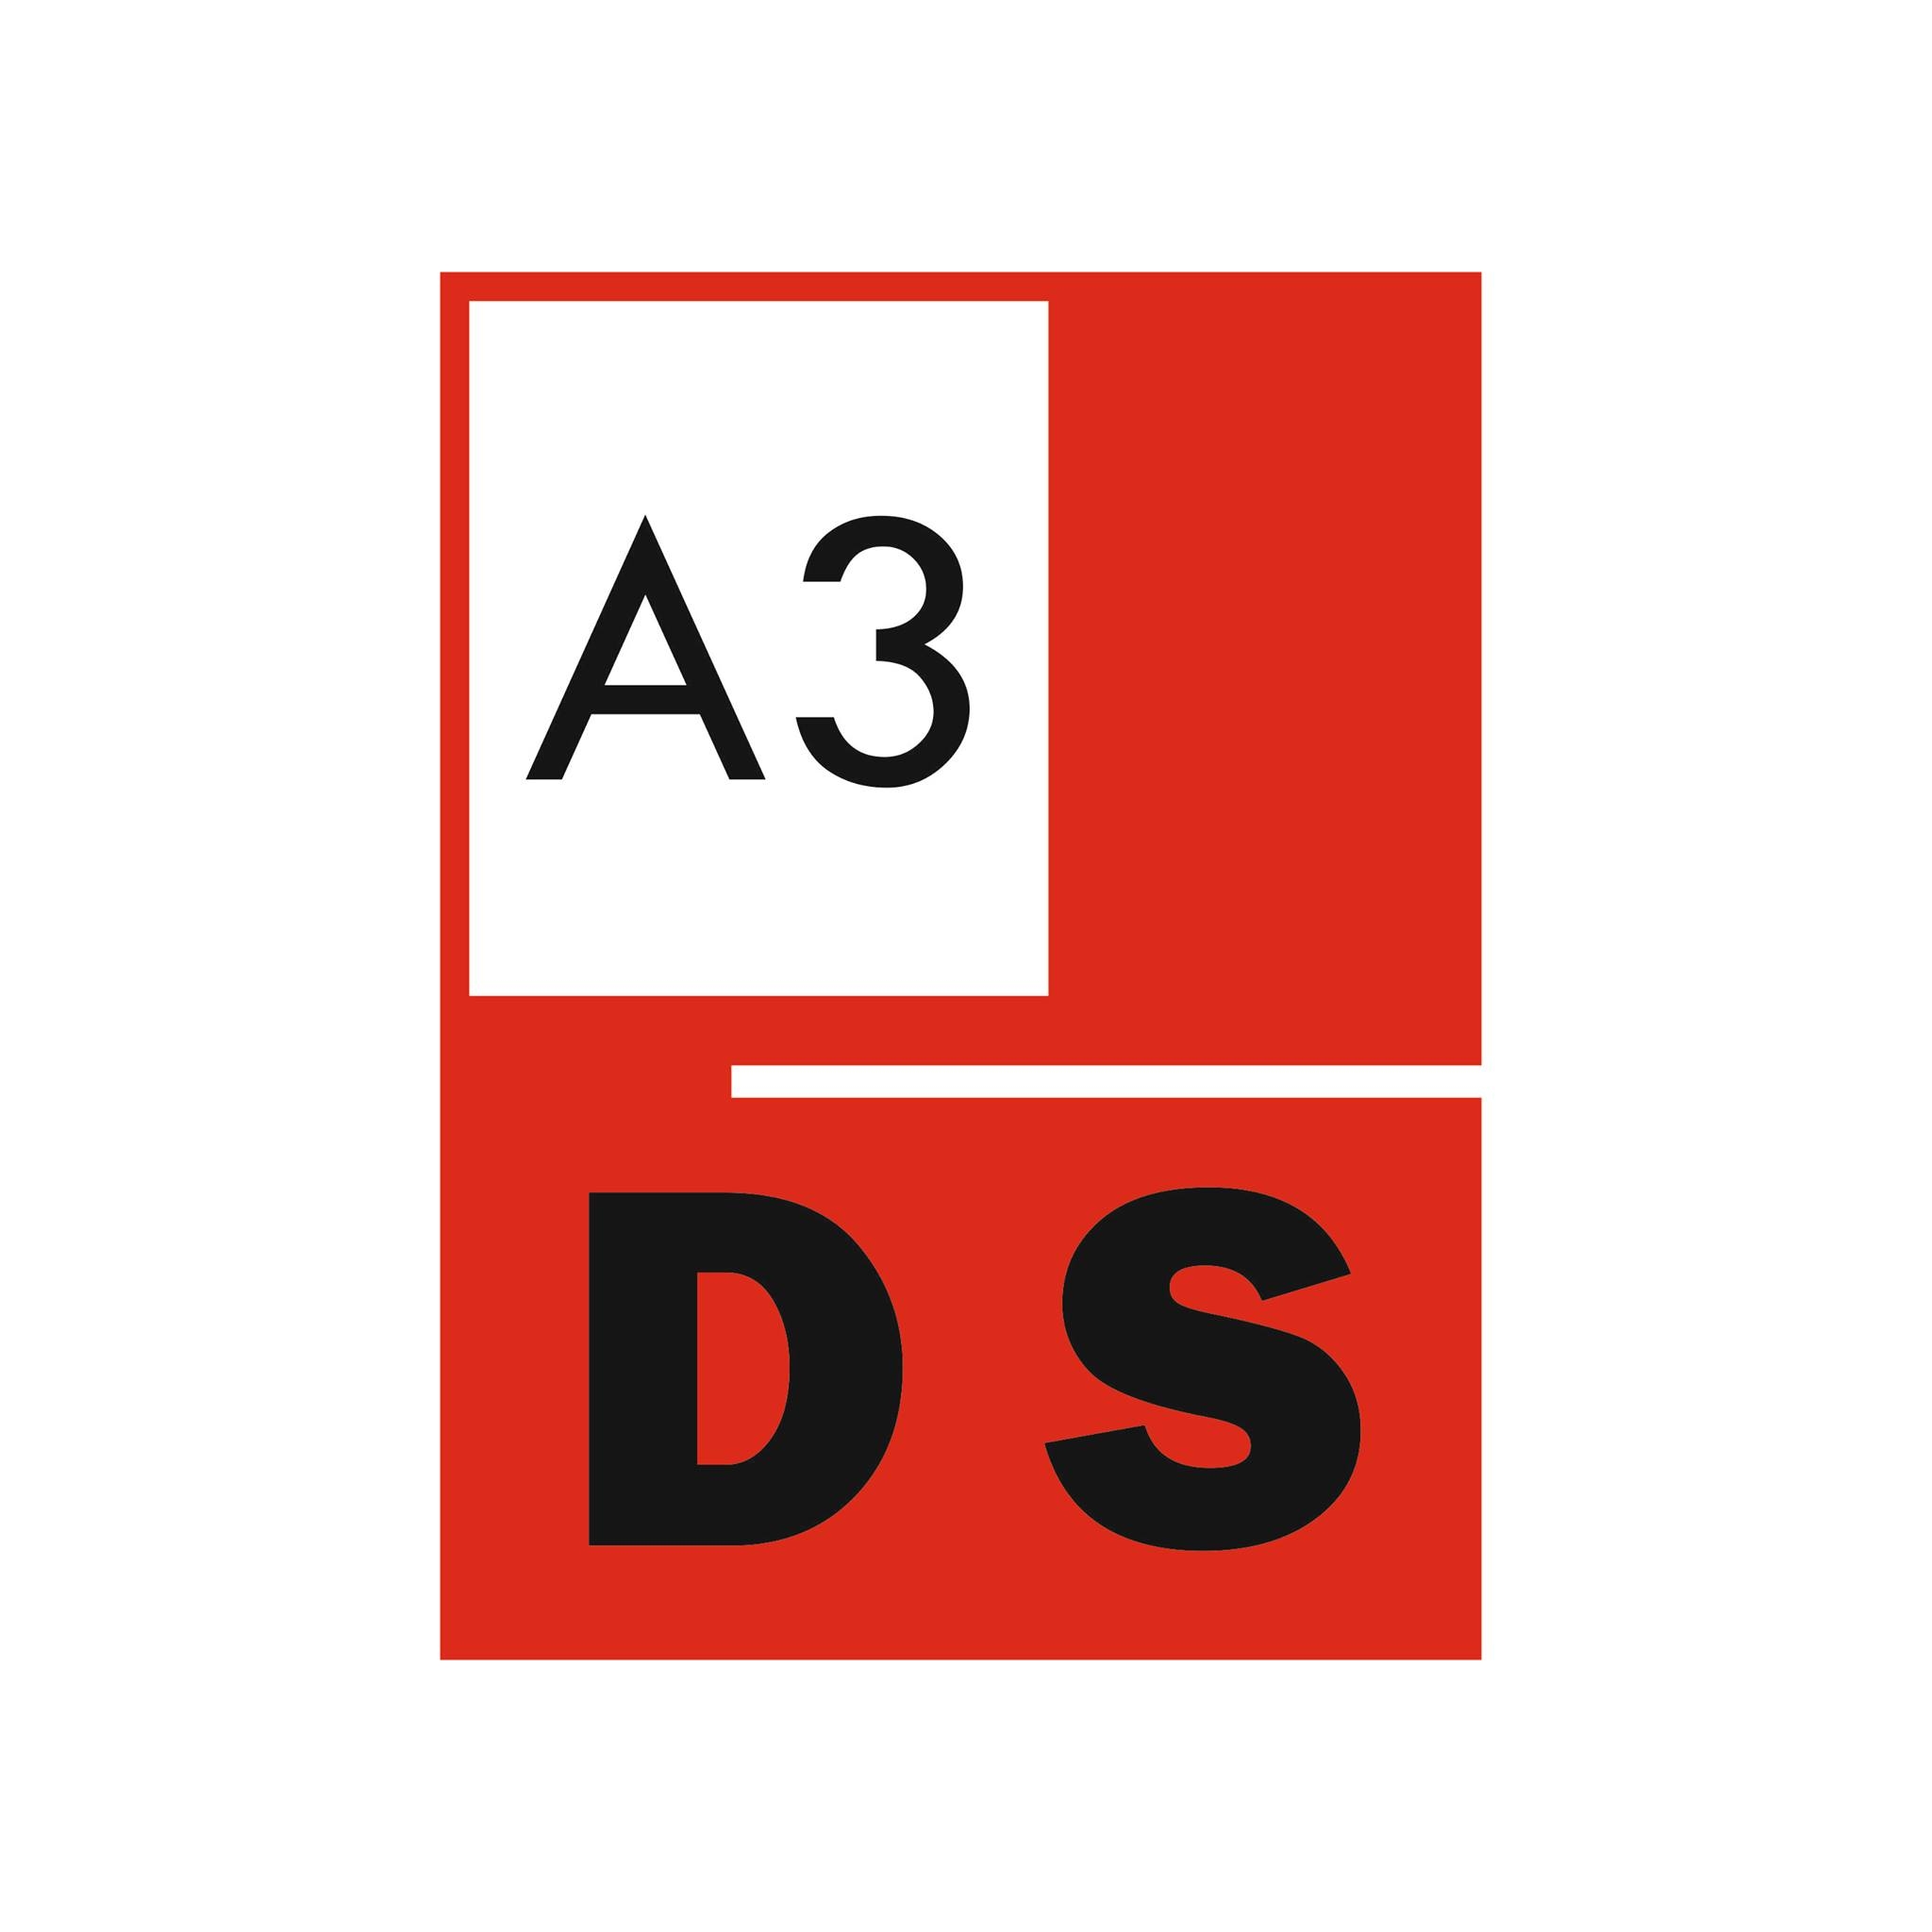 a3 design studio|IT Services|Professional Services